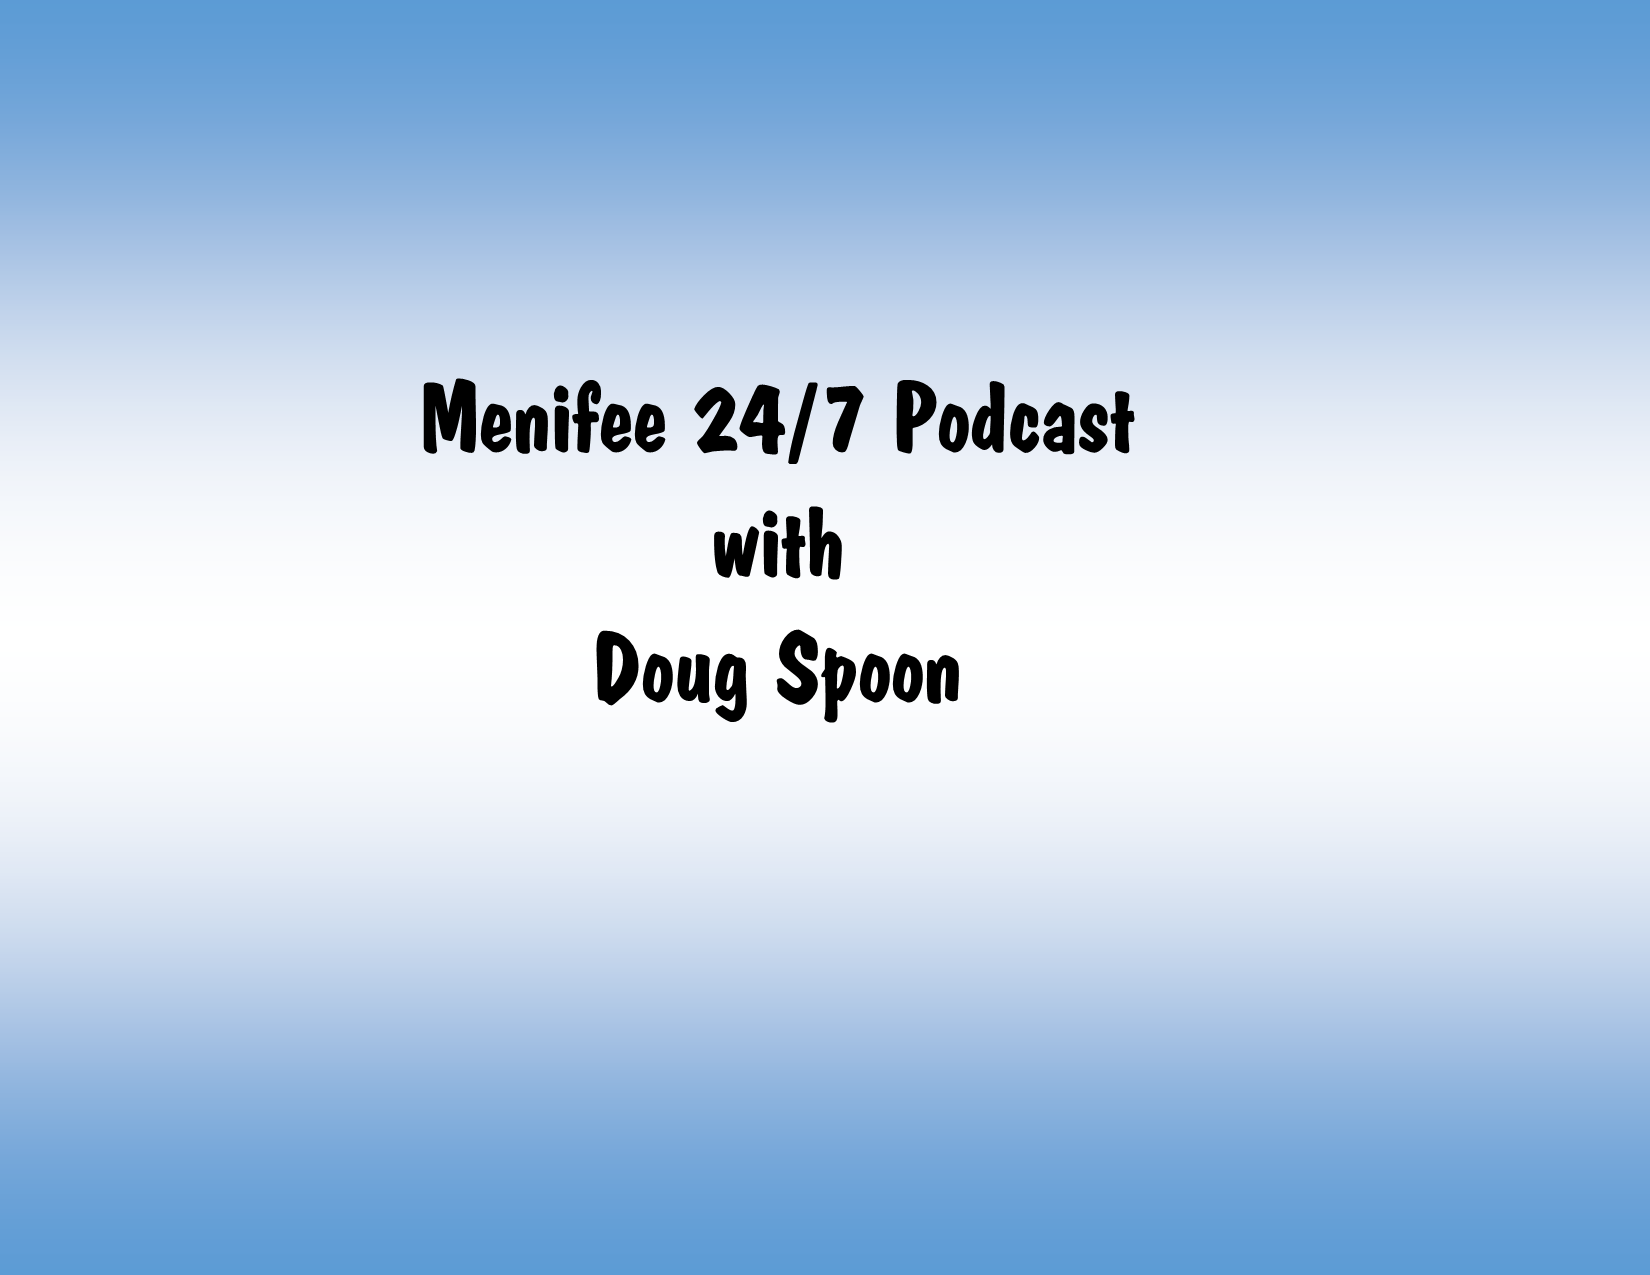 Menifee 24/7 Podcast with Doug Spoon